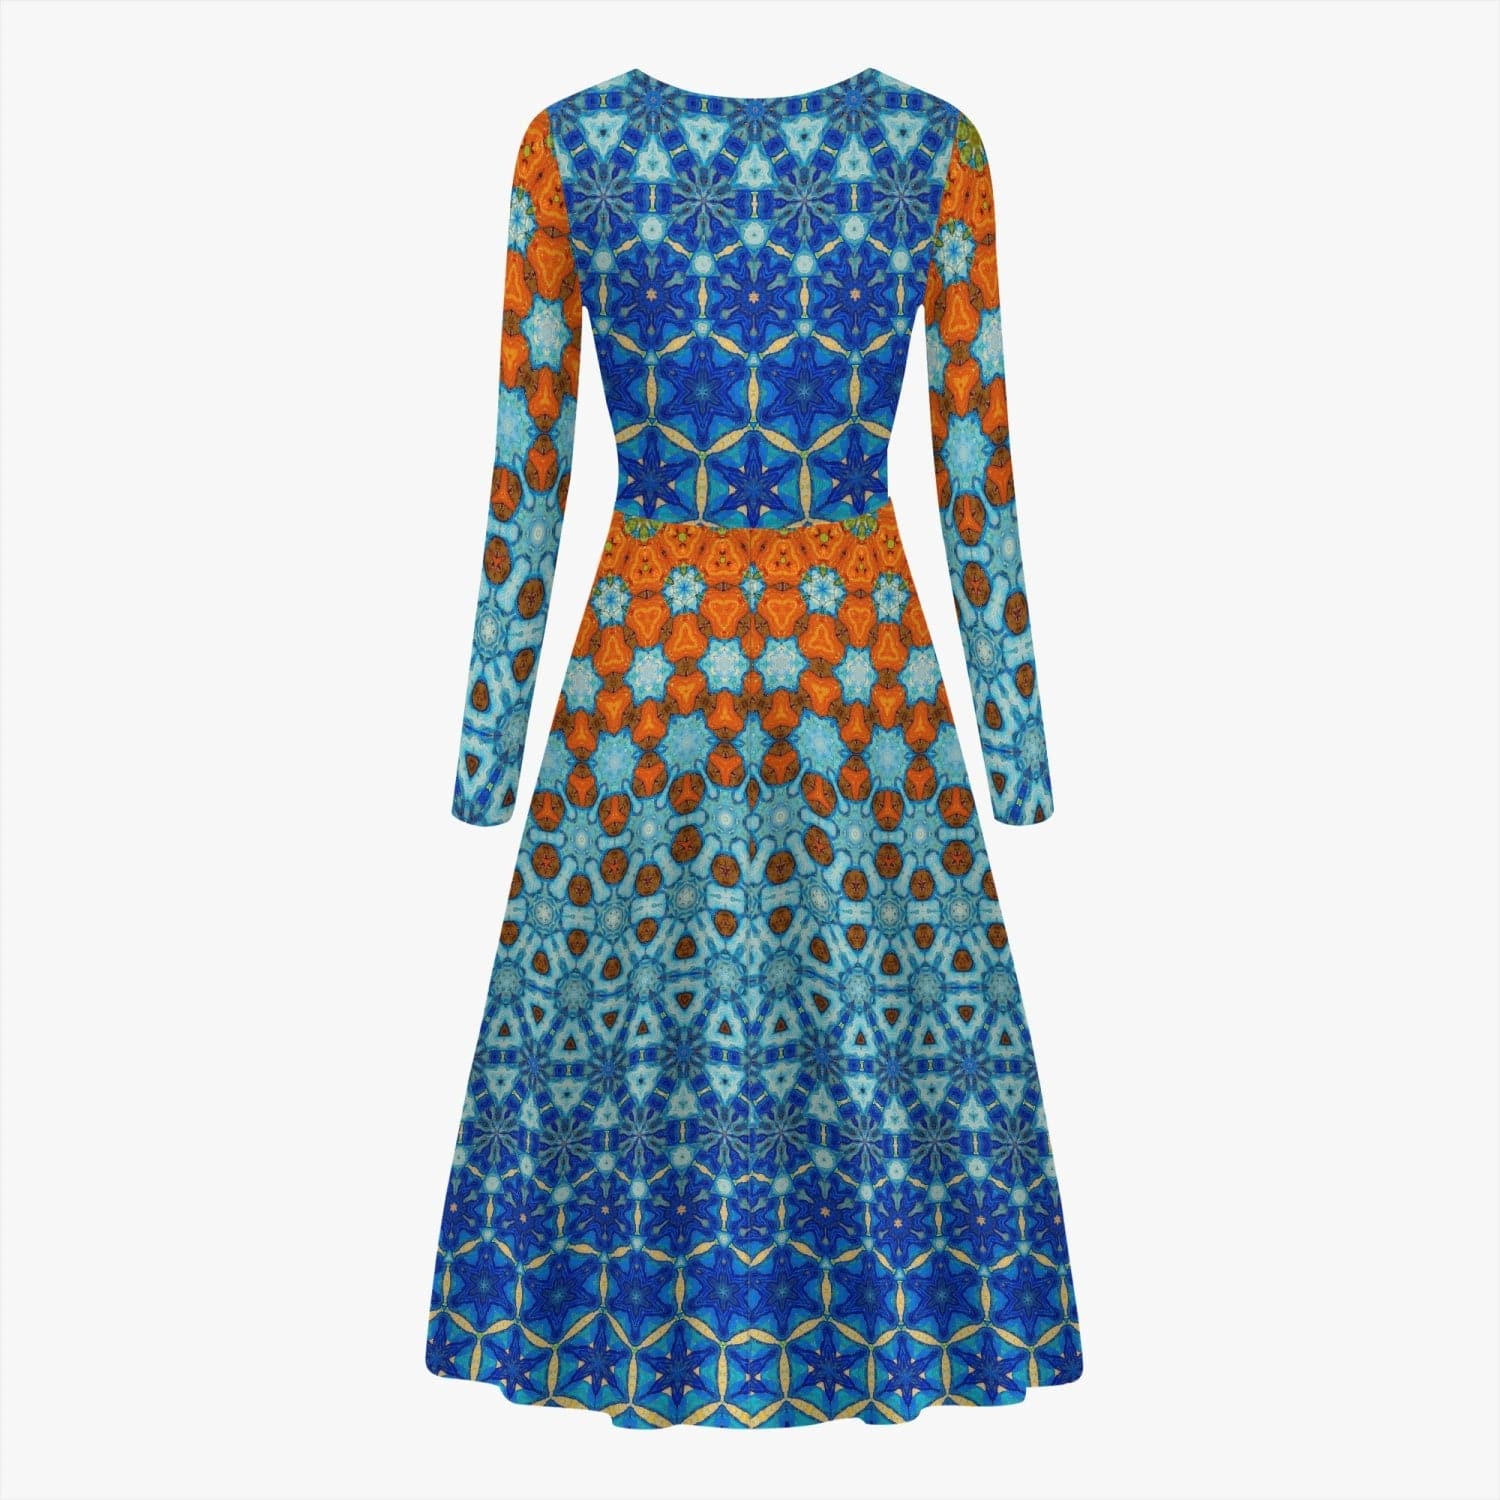 Orange and Blue Joy! trendy 2022  Women's Long-Sleeve One-piece Dress, by Sensus Studio Design